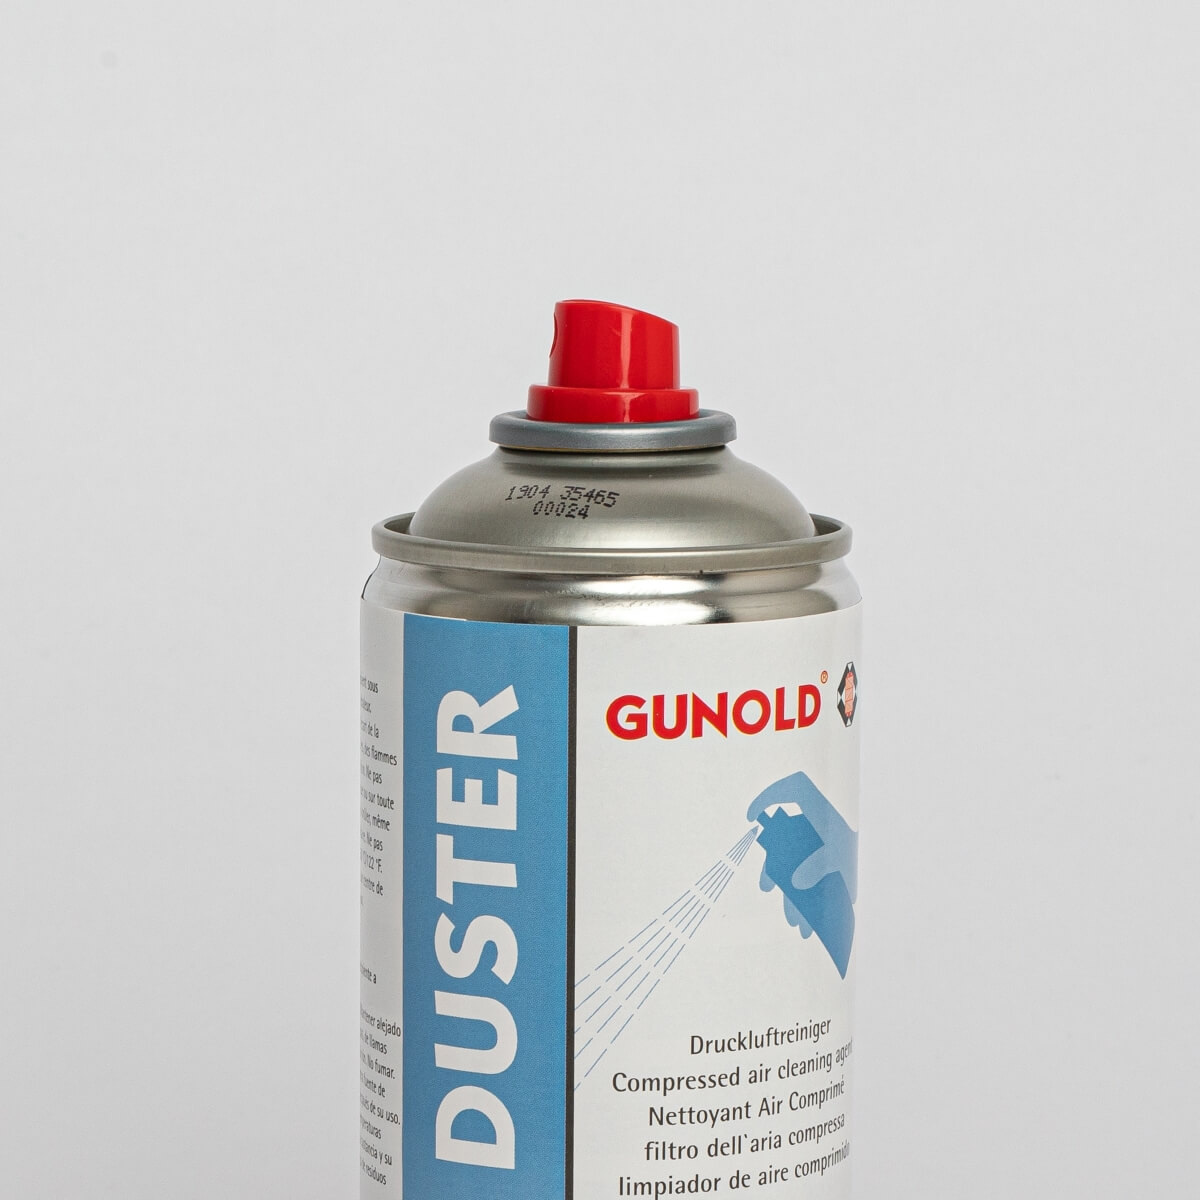 GUNOLD® AIR DUSTER, Druckluftspray, Dose
400 ml